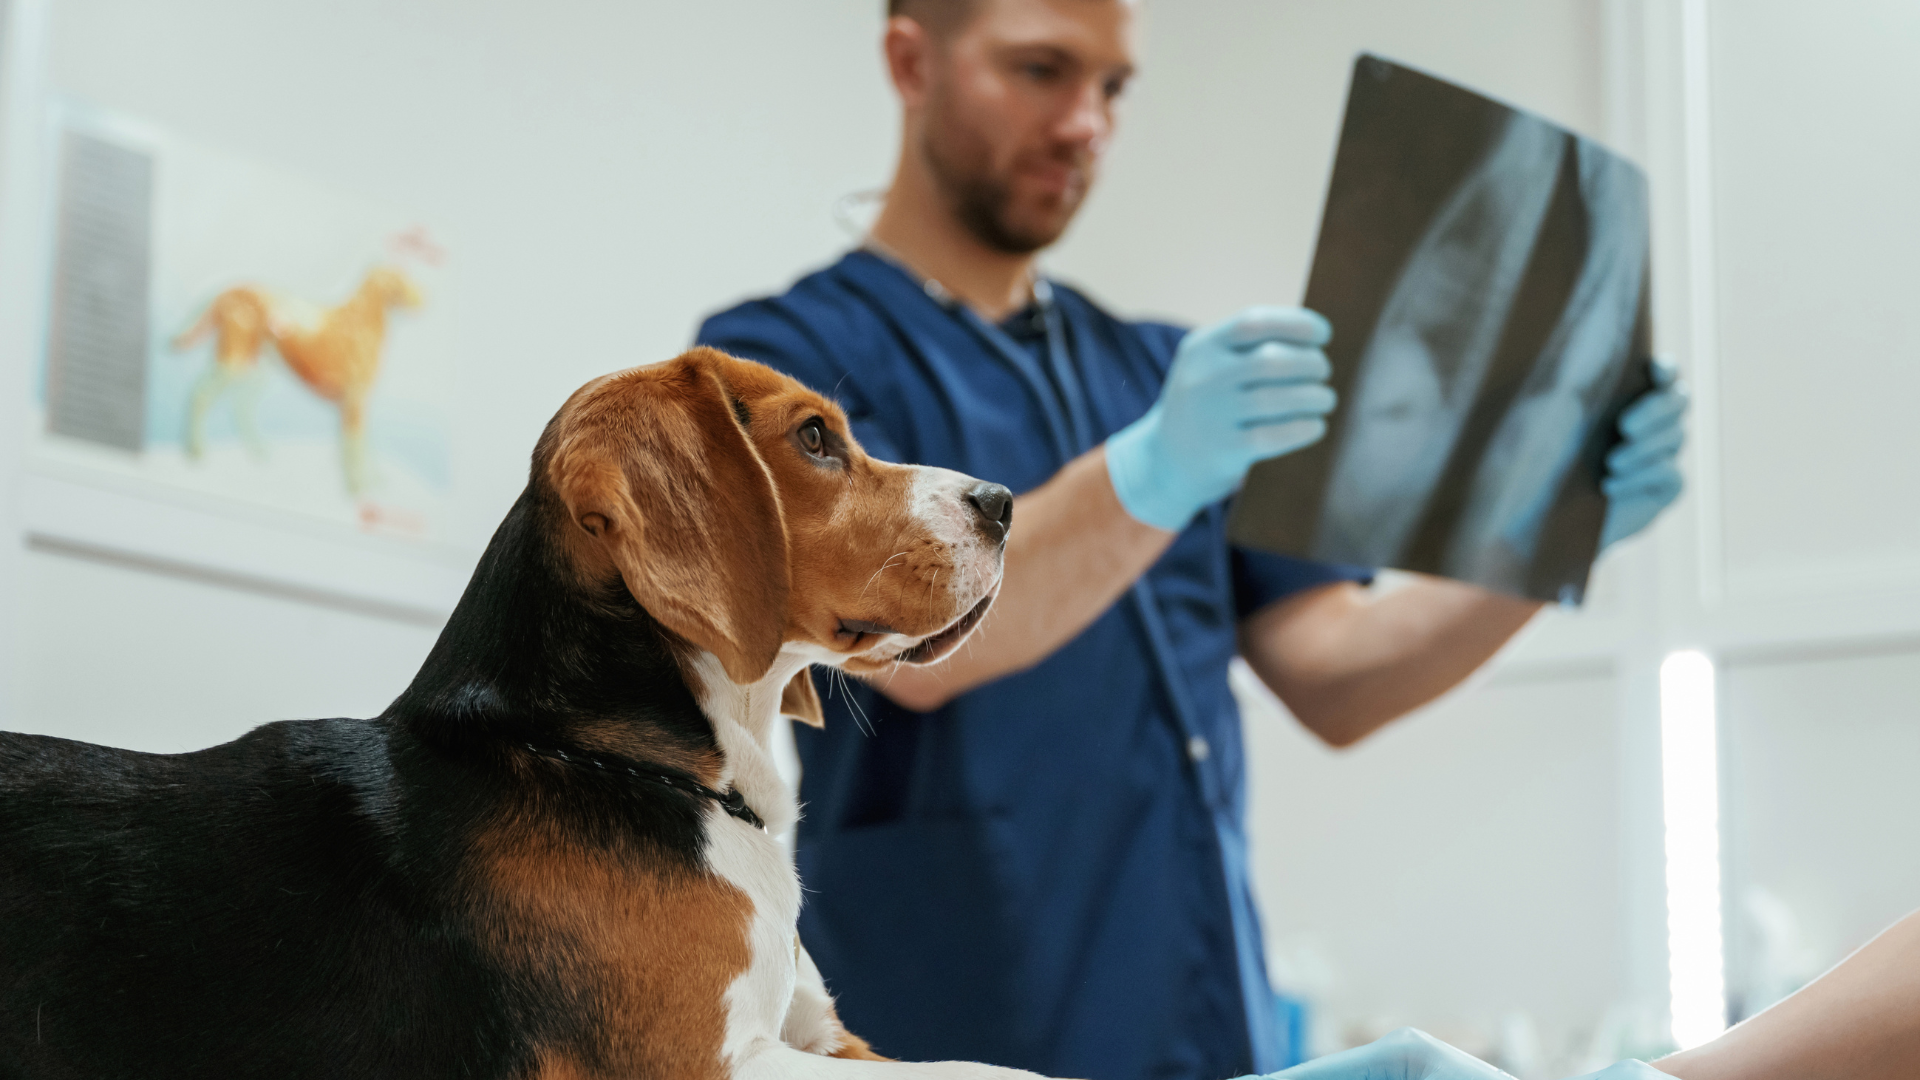 Bone Cancer in Dogs